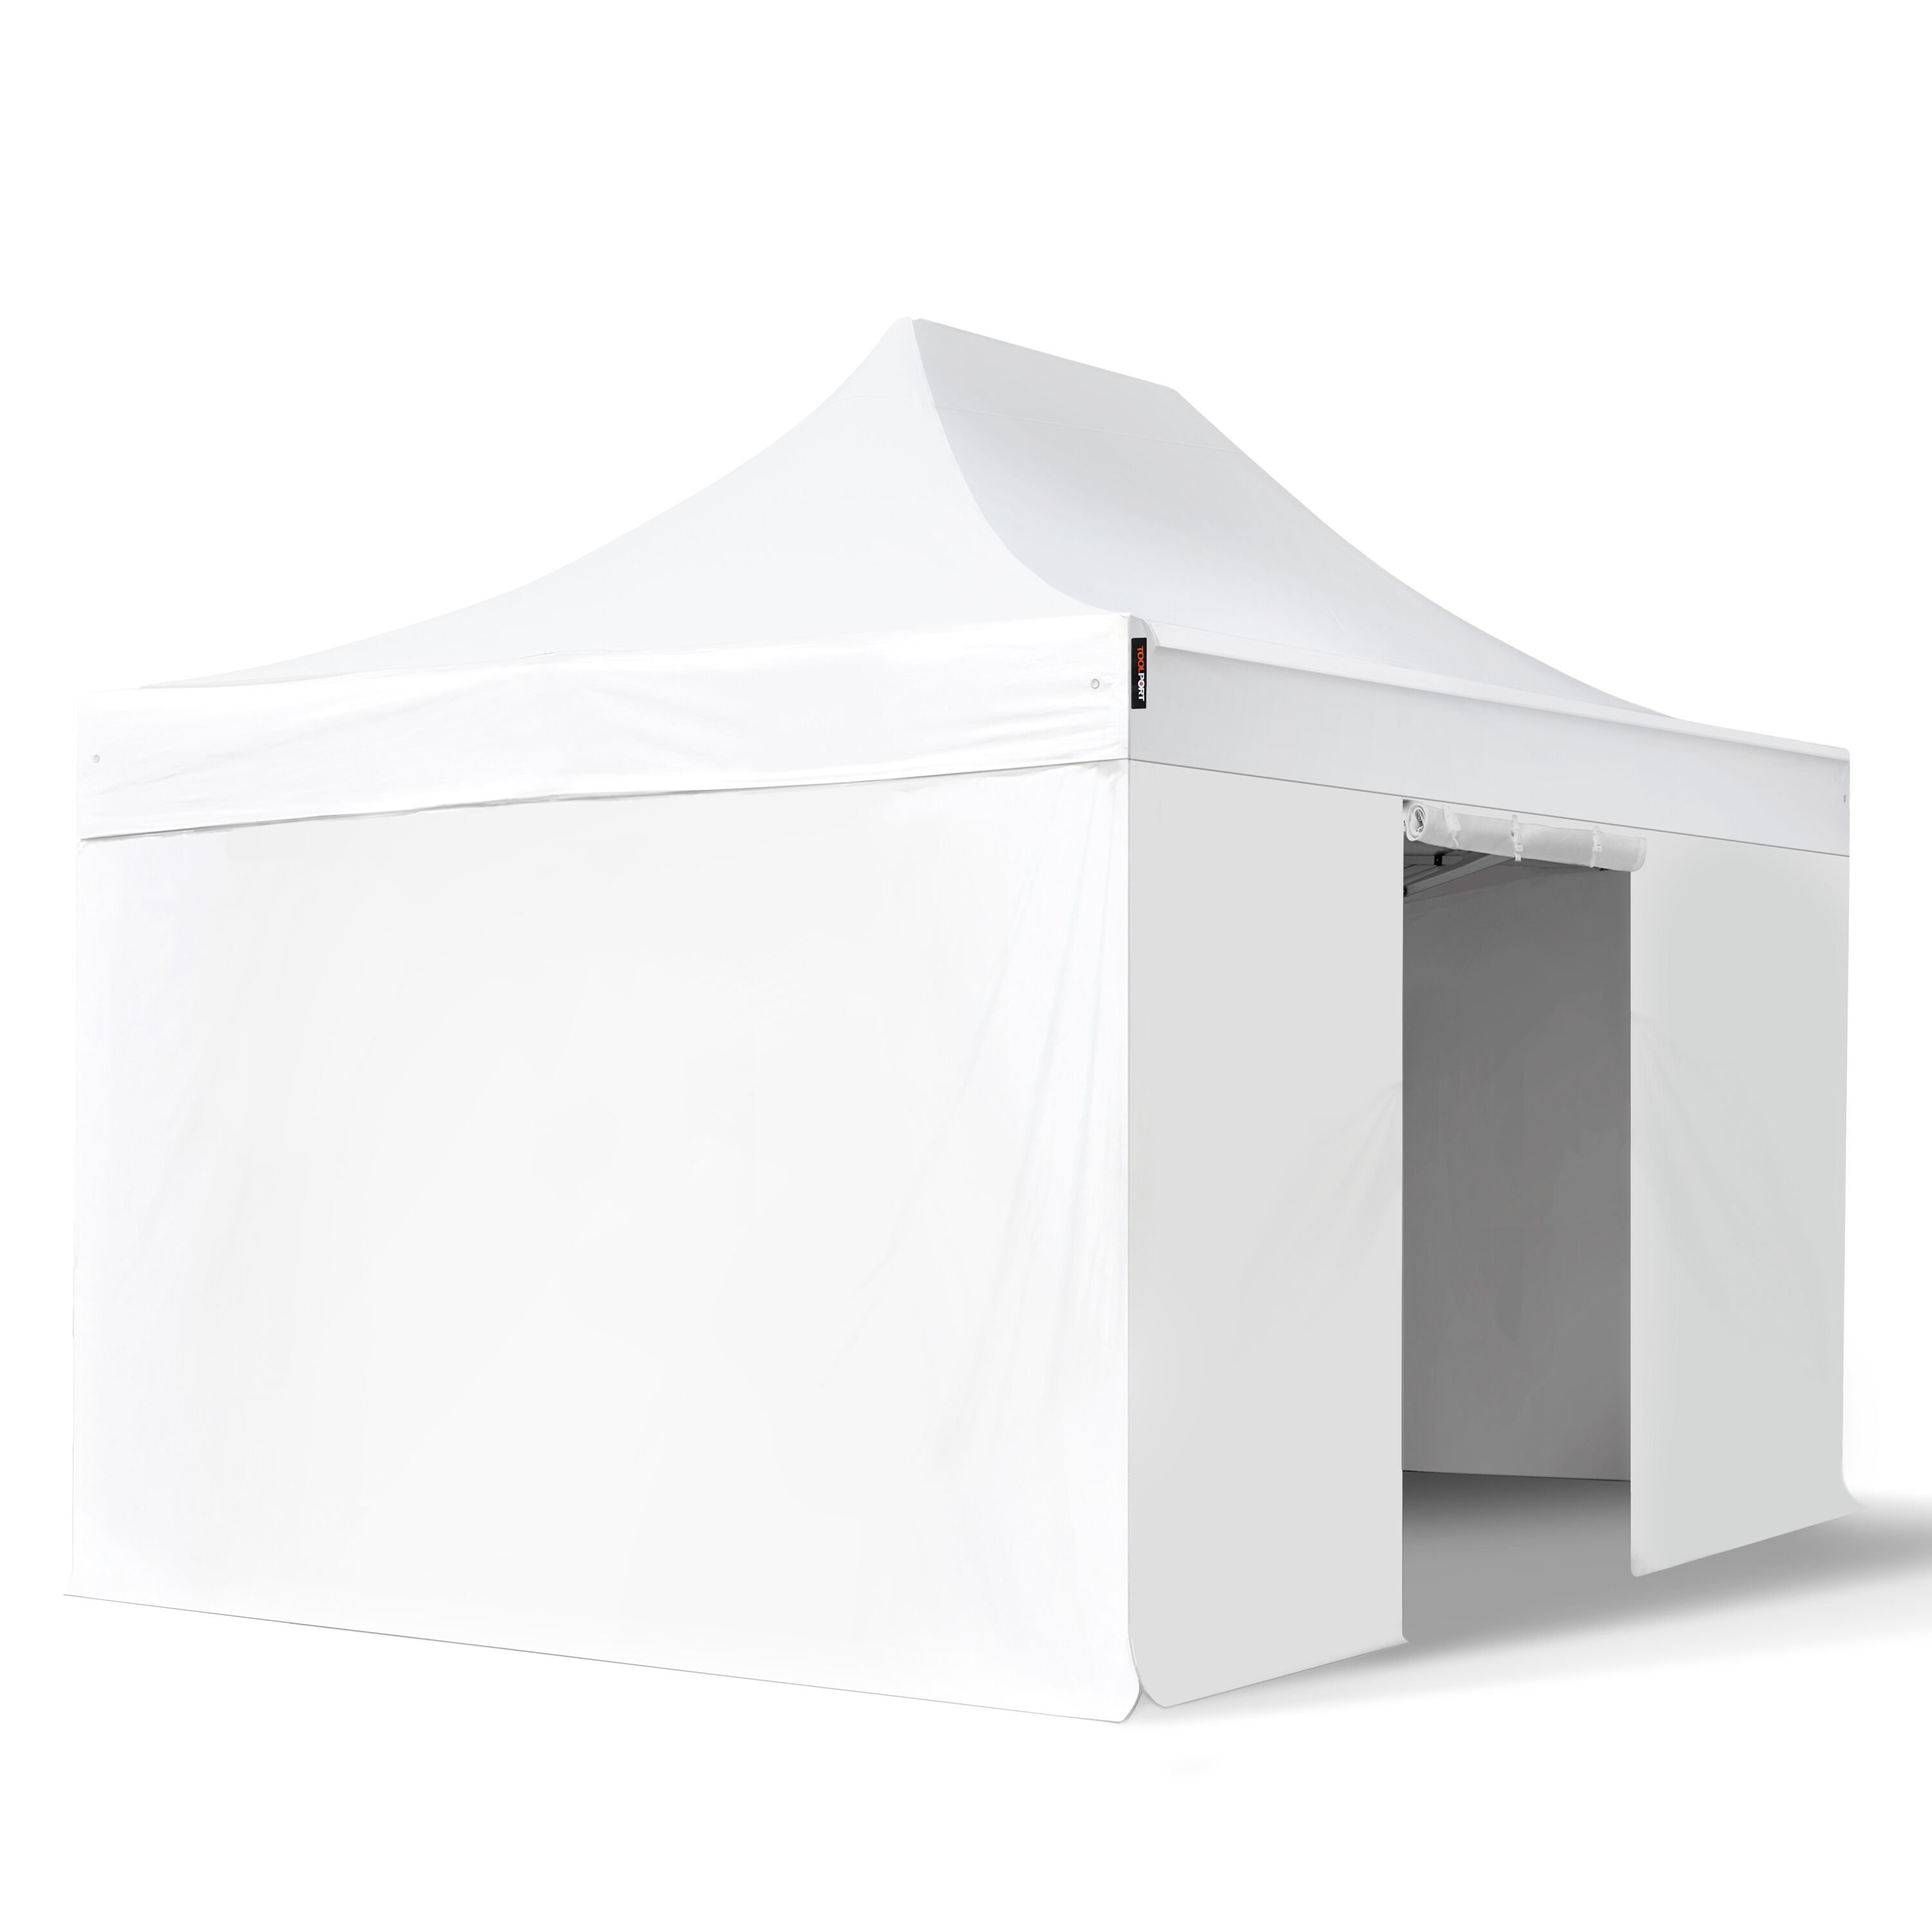 TOOLPORT Easy Up pavillon 3x4,5m Kvalitetspolyester 350 g/m² hvid 100 % vandtæt Faltzelt, Klappzelt hvid